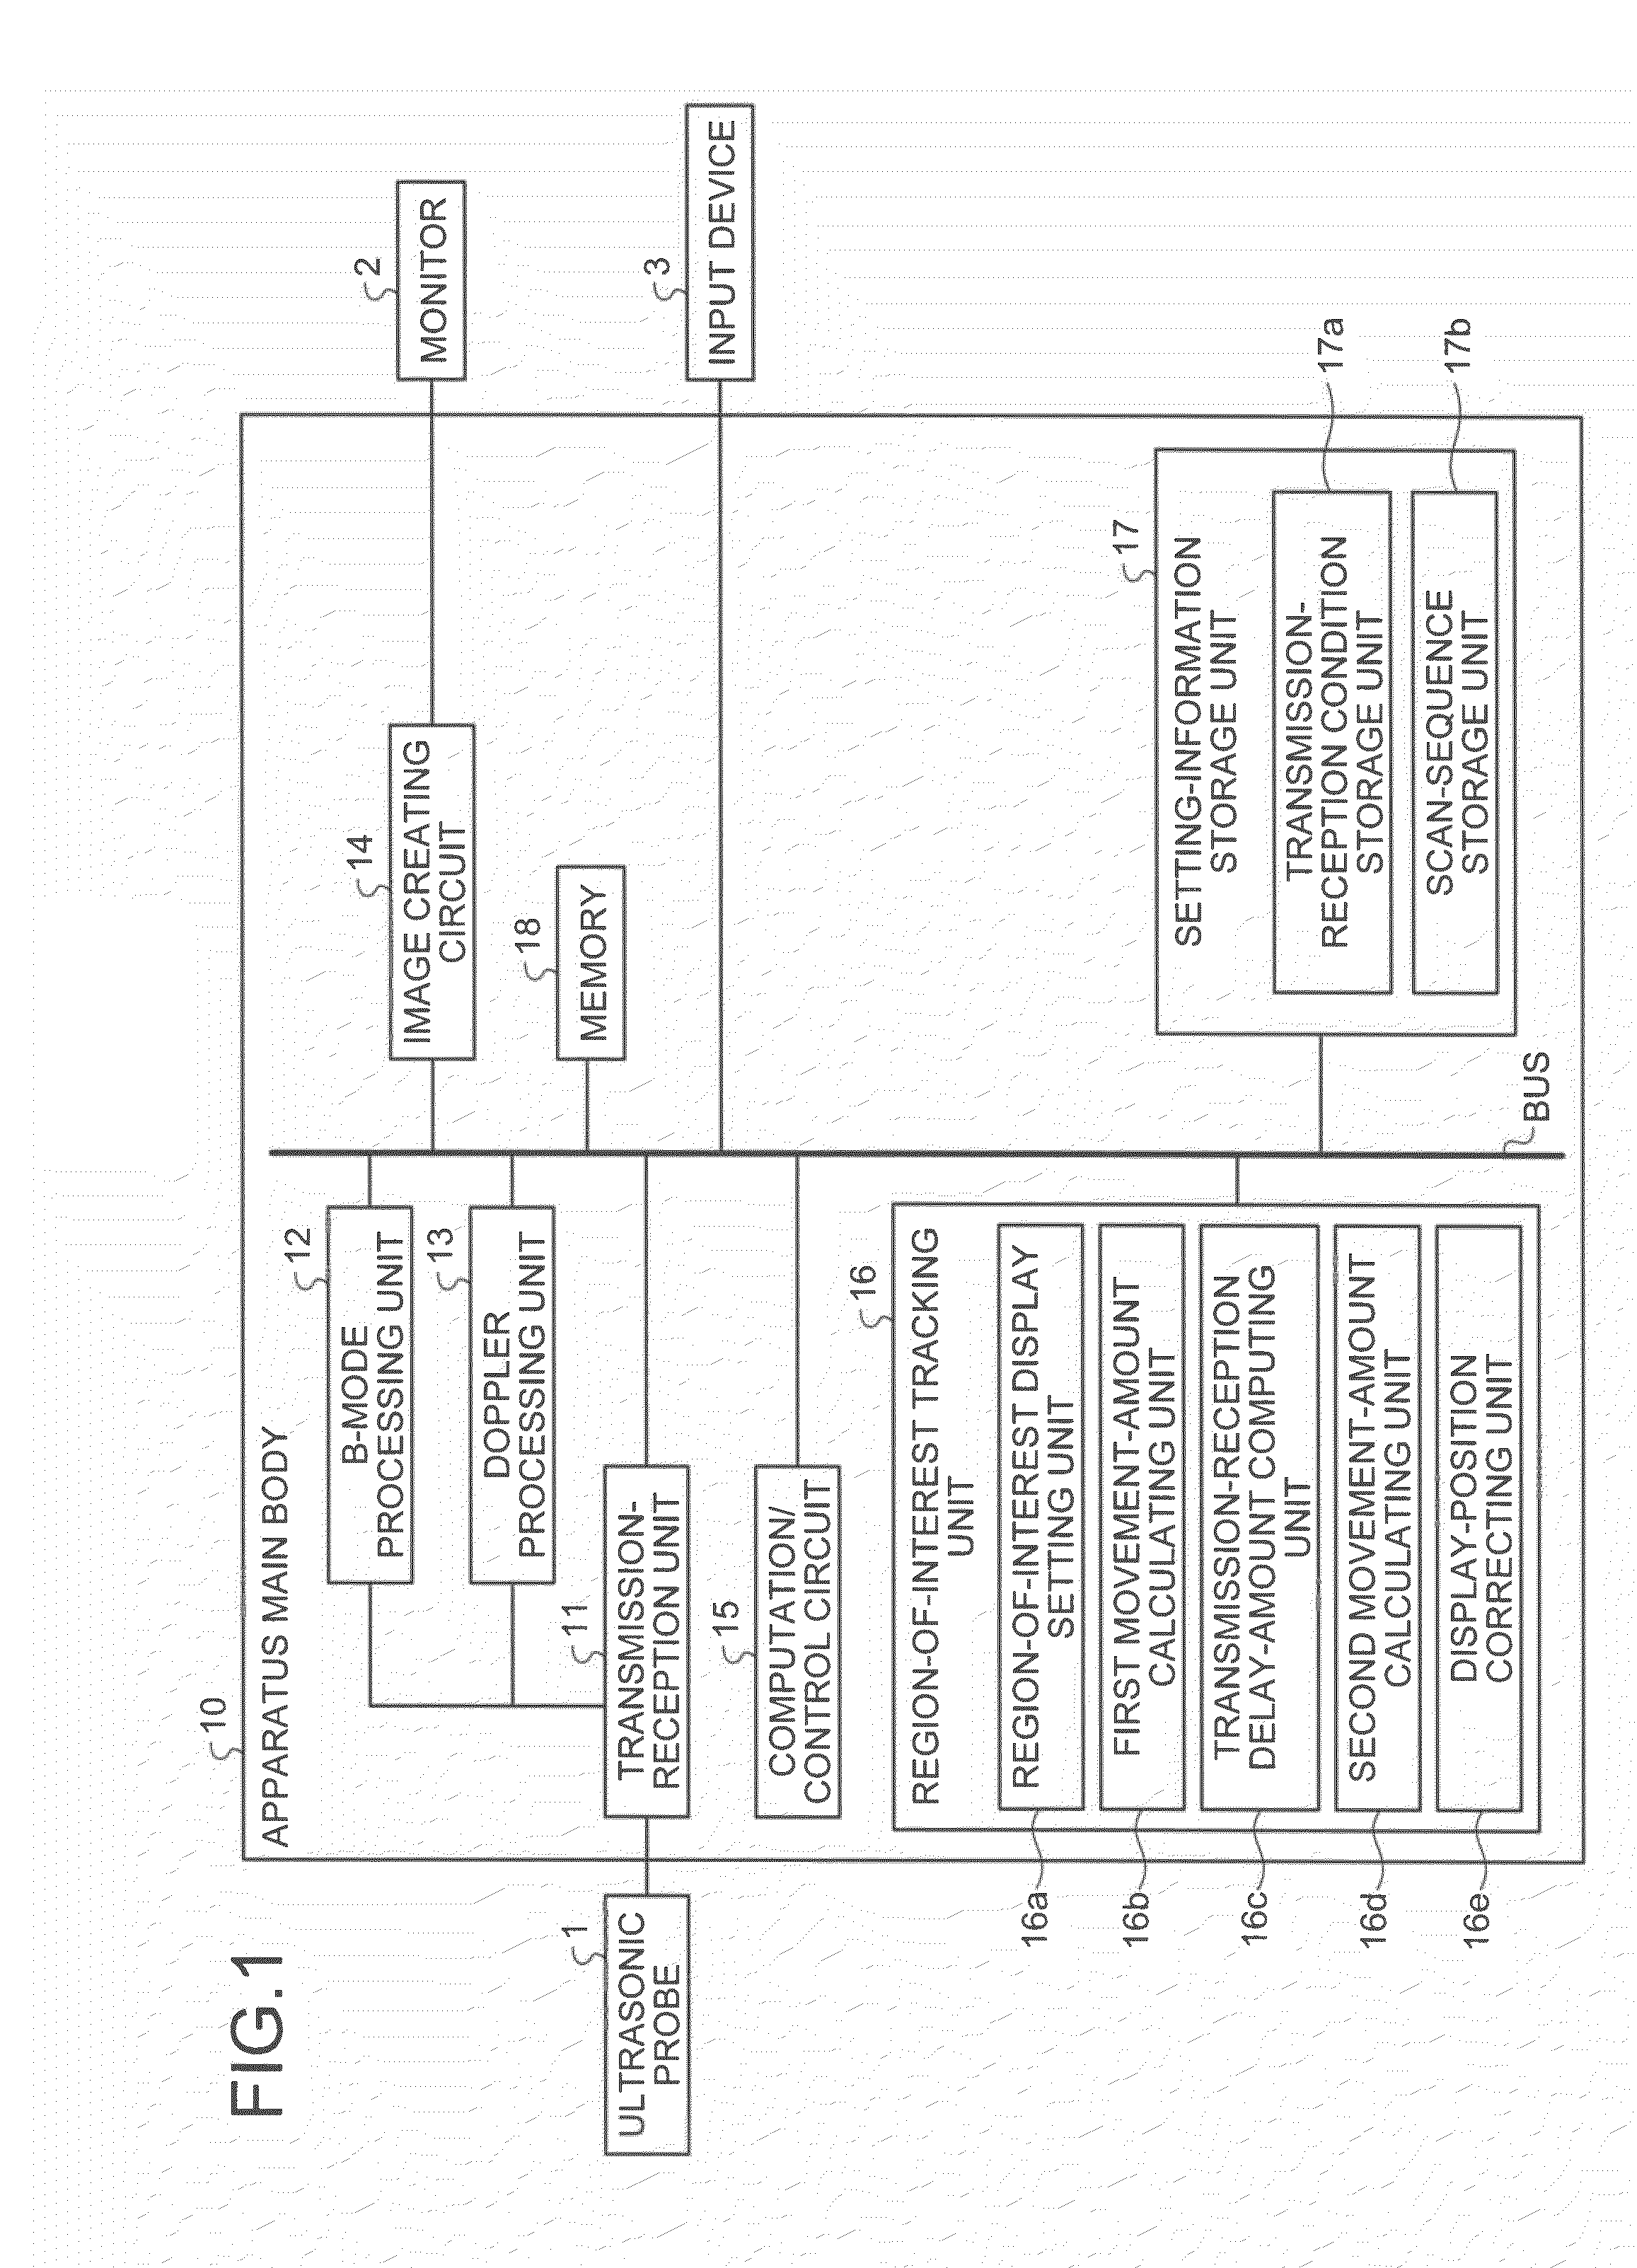 Ultrasonic diagnostic apparatus and computer program product